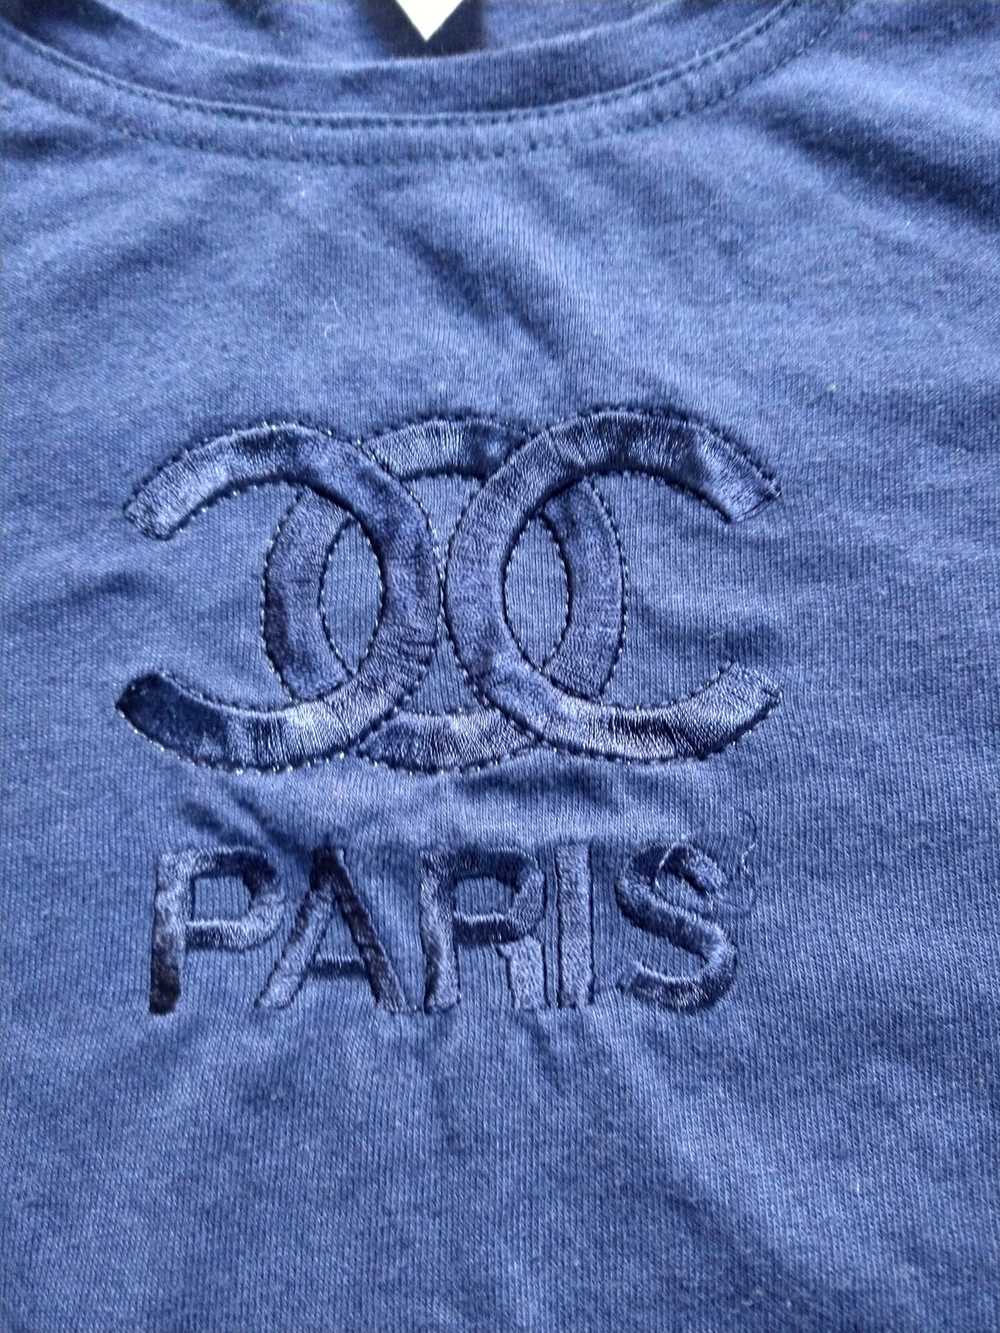 Vintage Vintage Tshirt Navy Blue Tee Paris Short … - image 3